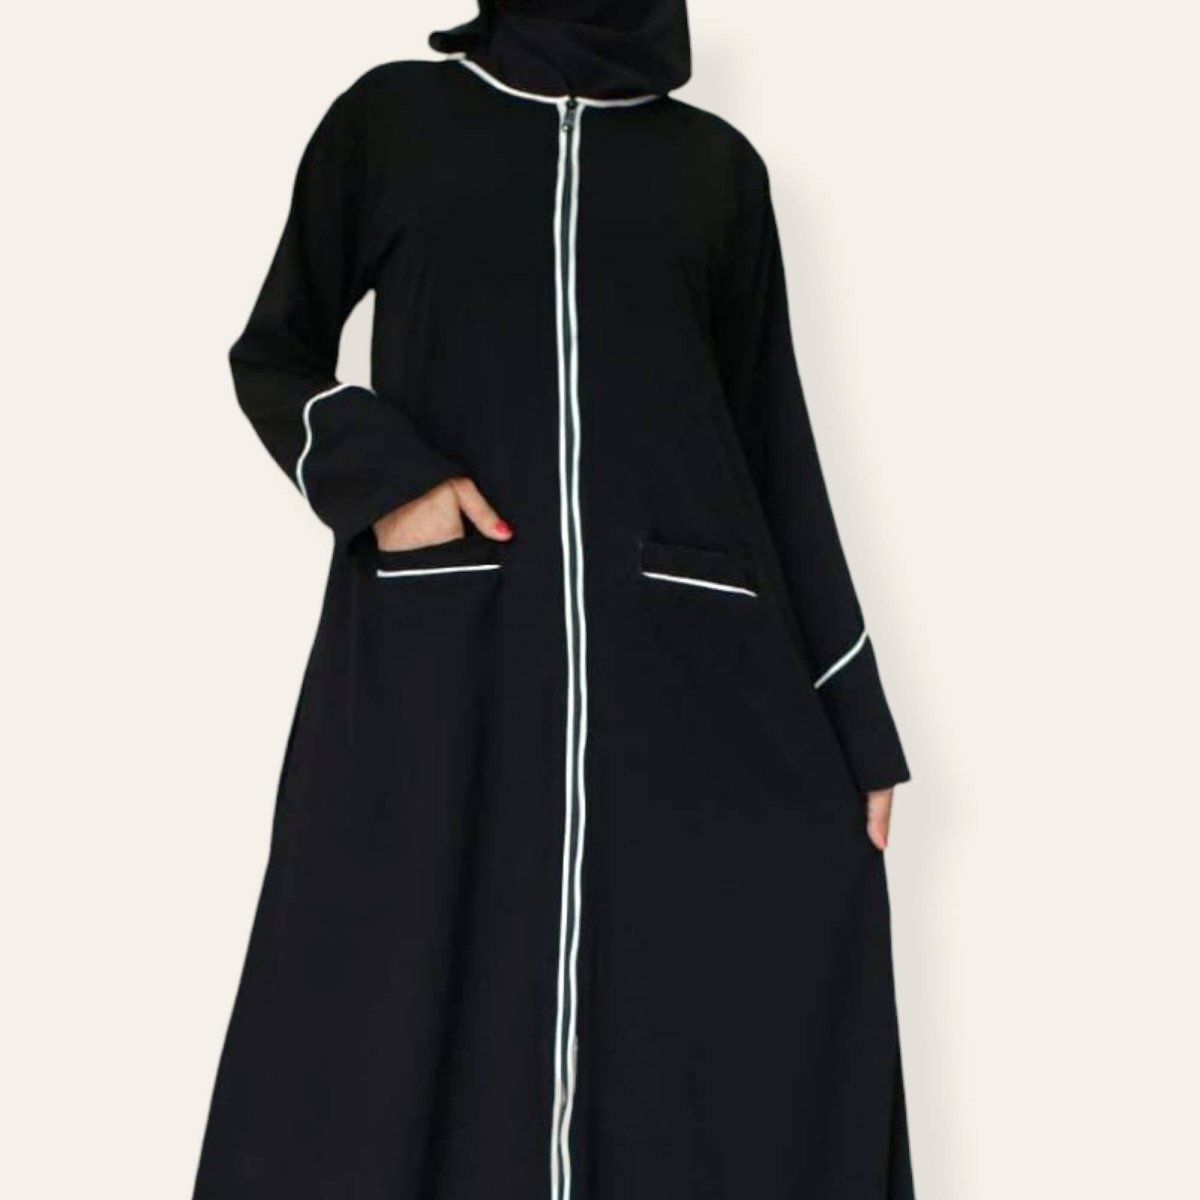 Women Black Abaya for Eid Dresses with Pocket | Zhaviah